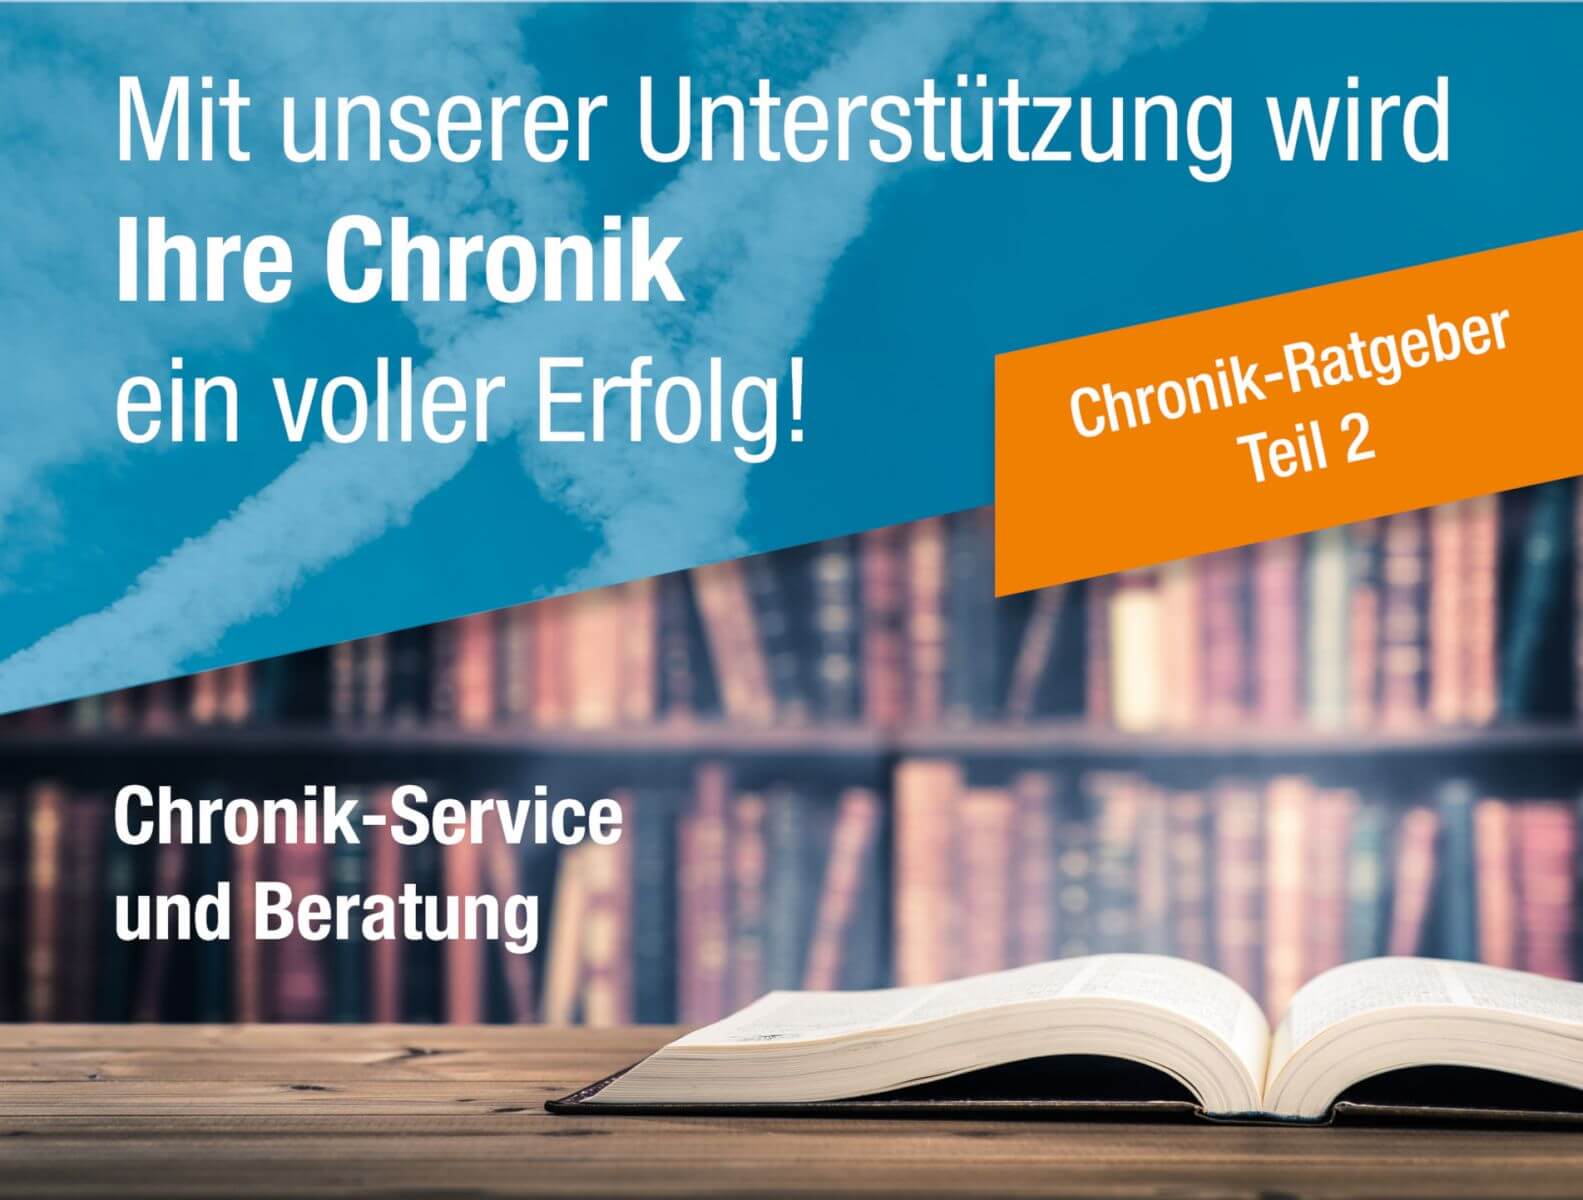 Chronik-Ratgeber: Teil 2 - Chronik-Service und Beratung